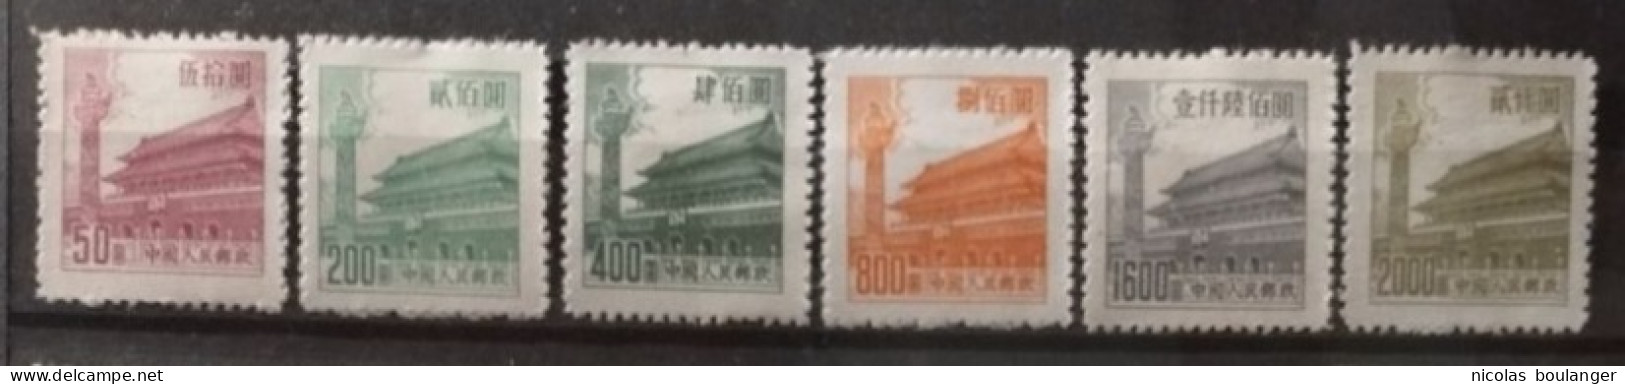 Chine 1954 / Yvert N°1008-1015 / * (sans Gomme) - Neufs